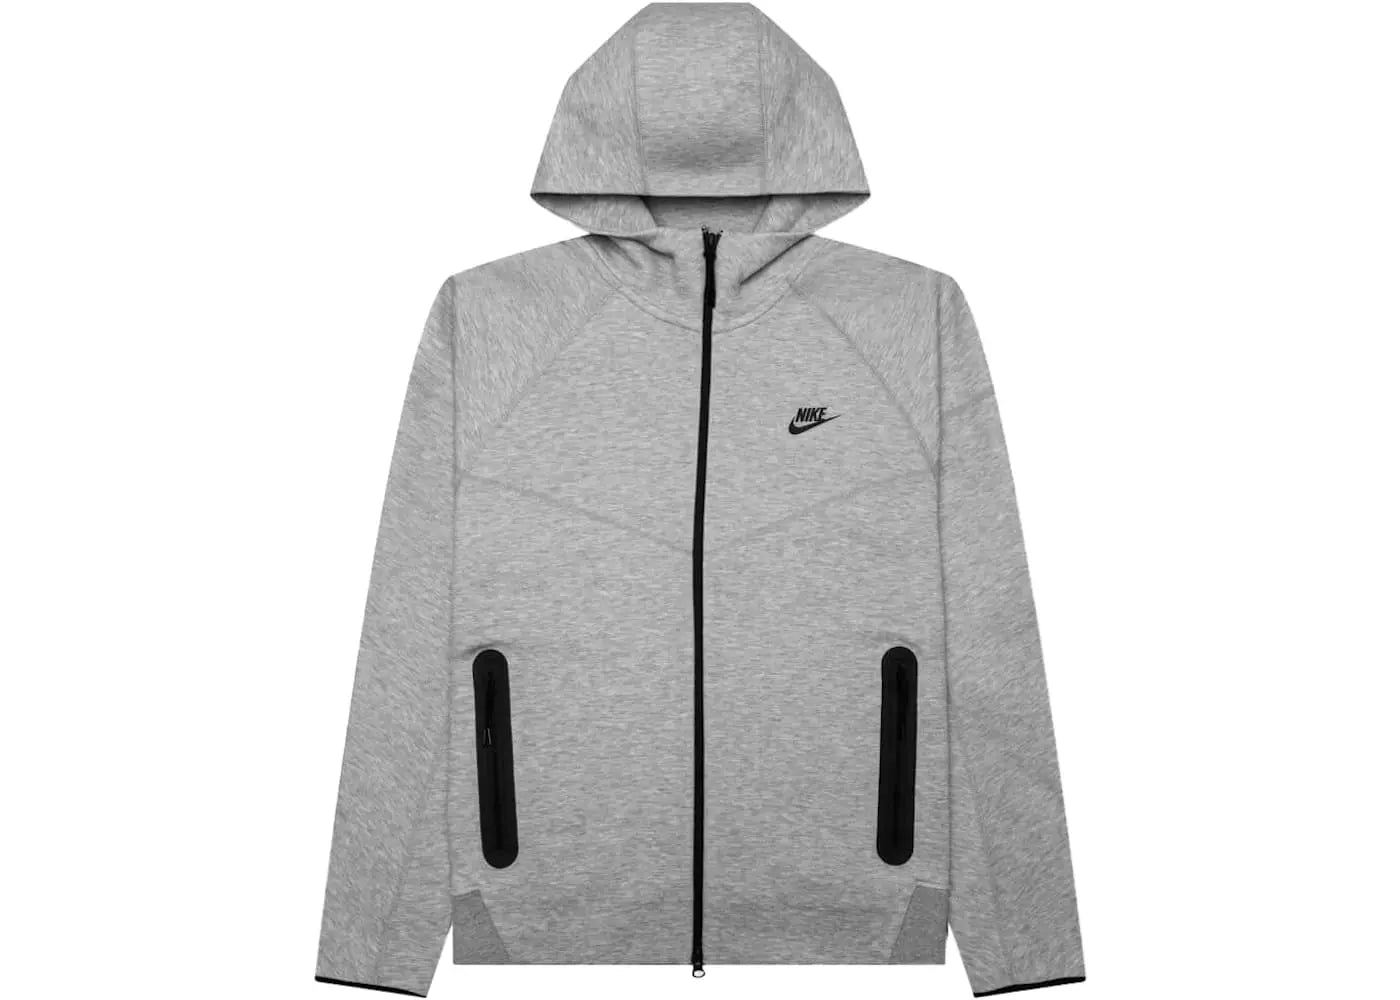 Nike Sportswear Tech Fleece Windrunner Full-Zip Hoodie Dark Grey Heather/Black in Auckland, New Zealand - Shop name